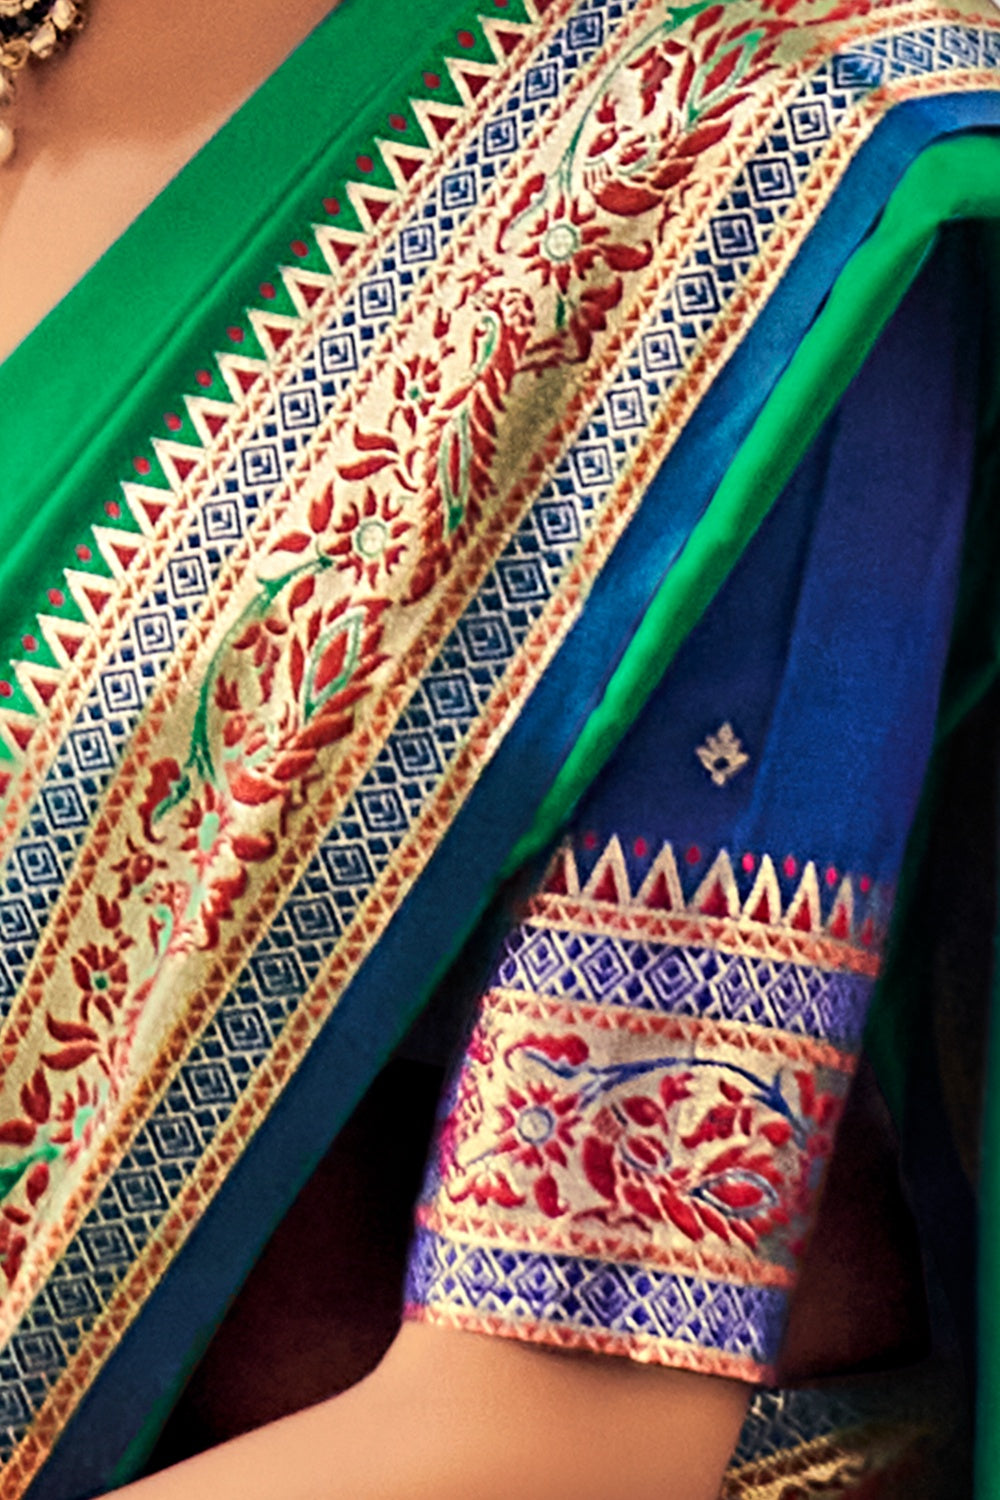 Jade Green Banarasi Plain Silk Saree With Zari Weaving Work